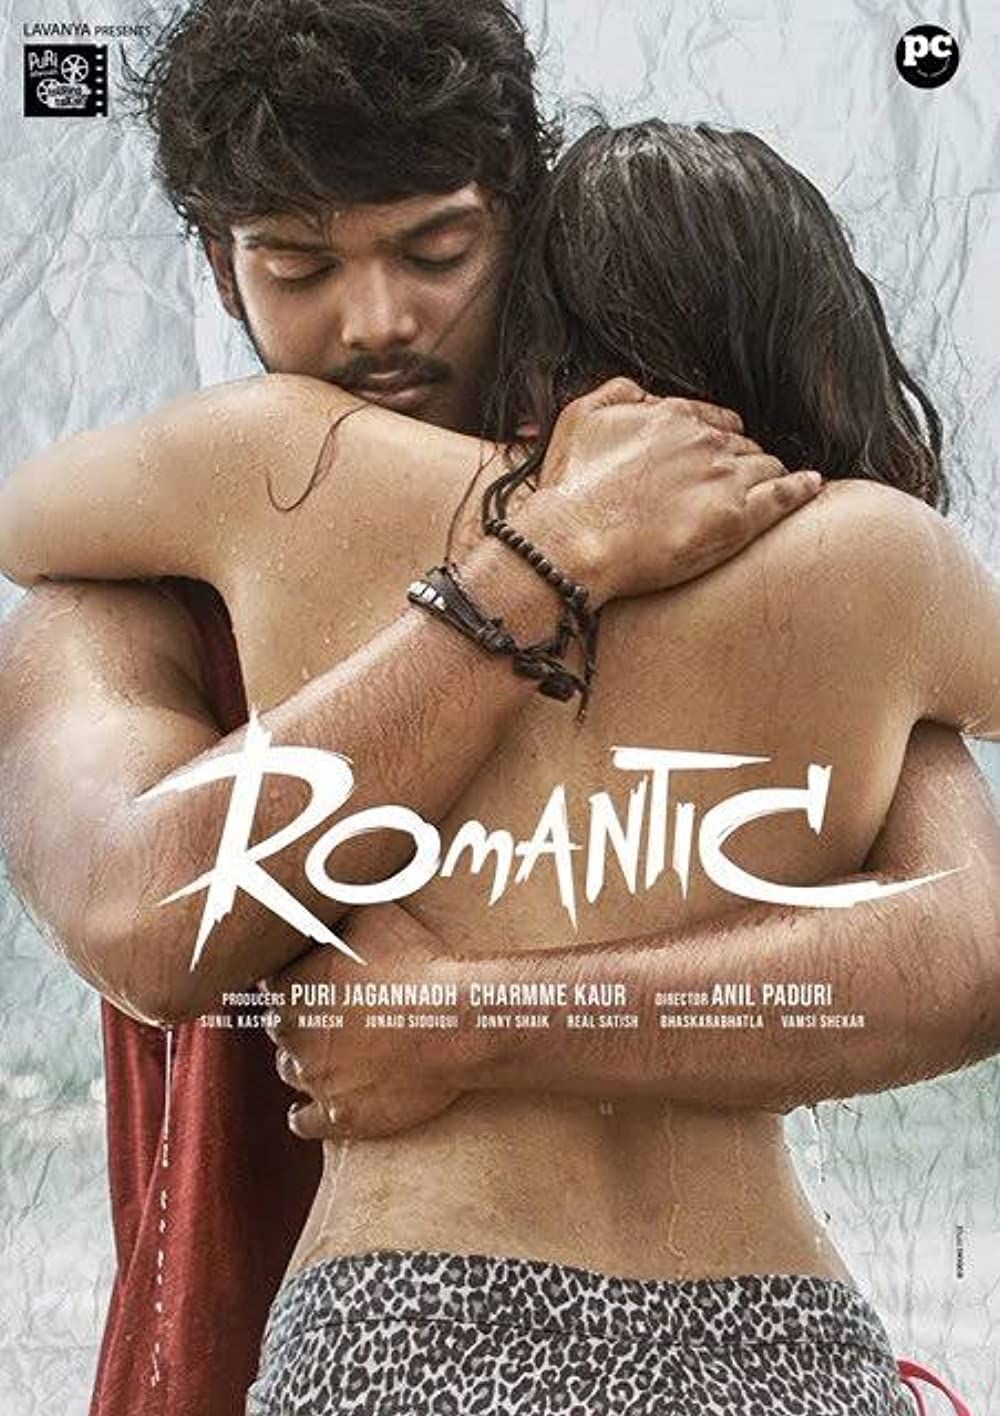 Romantic (2021) Hindi Dubbed UNCUT HDRip download full movie